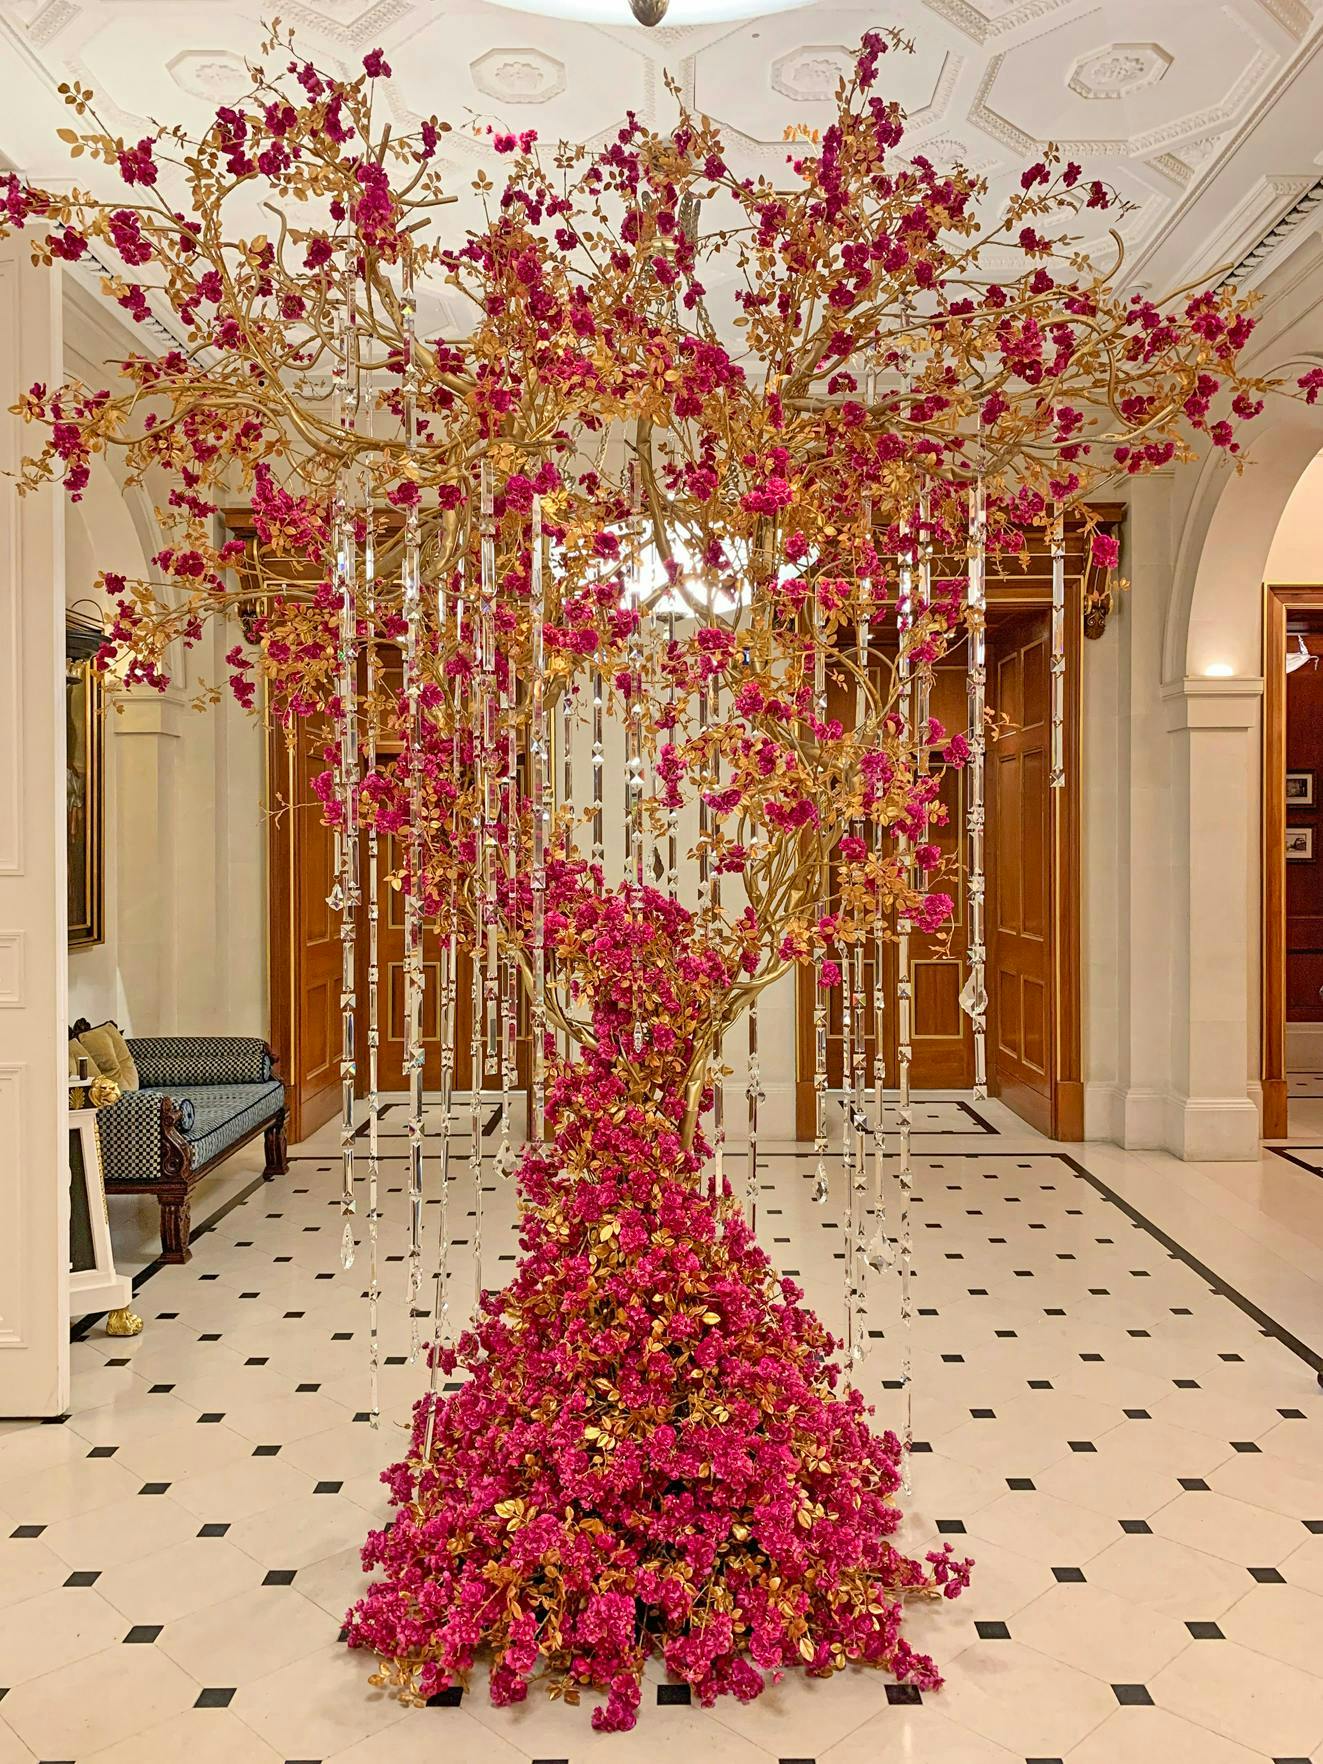 plant lobby indoors room interior design flower blossom floor petal